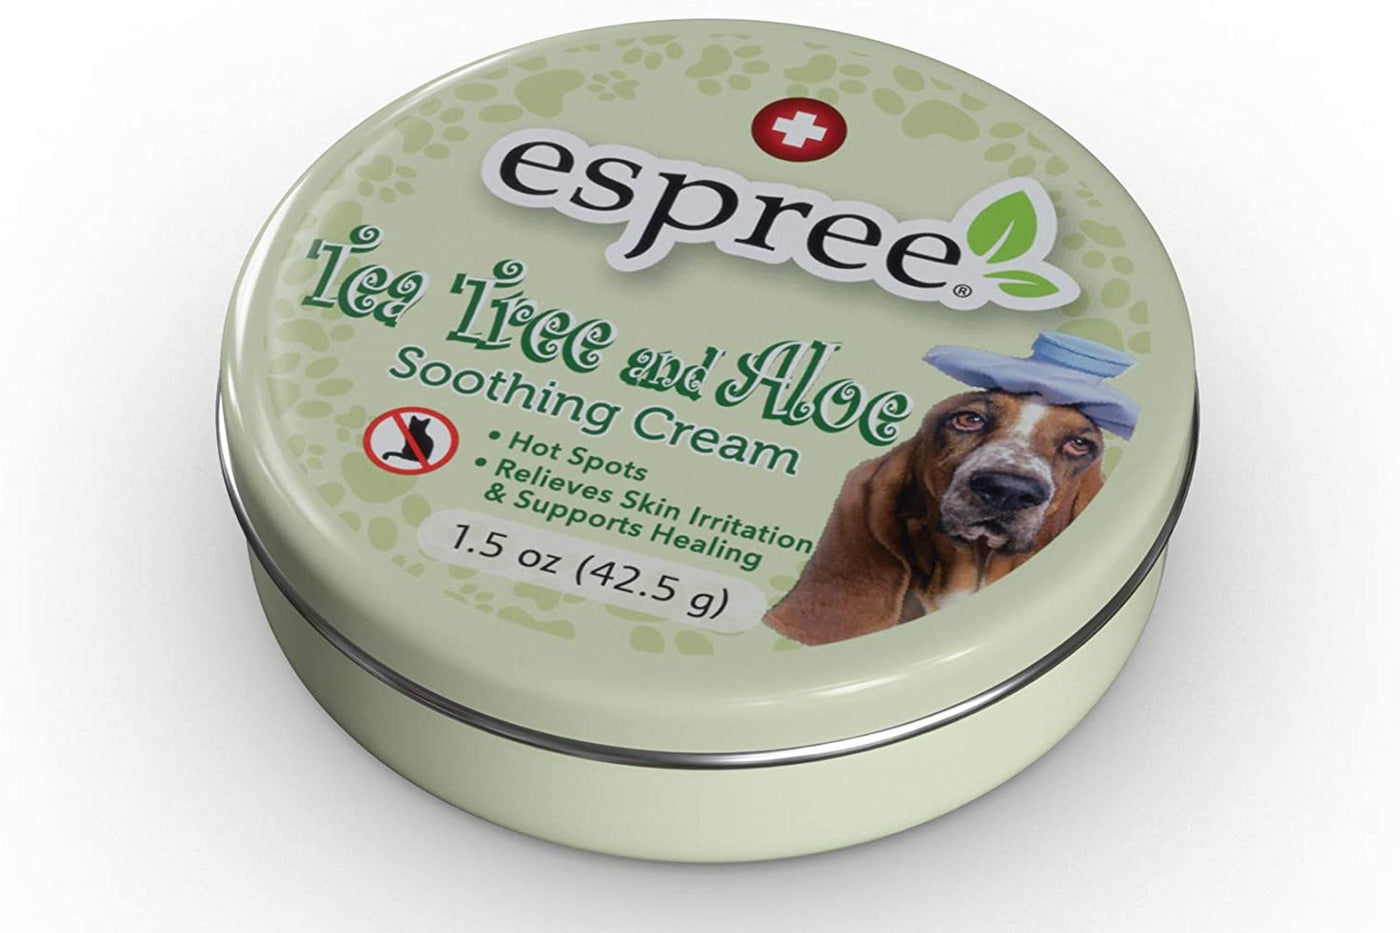 Espree TeaTree Aloe Vera Soothing Cream Healing Hot Spot Container